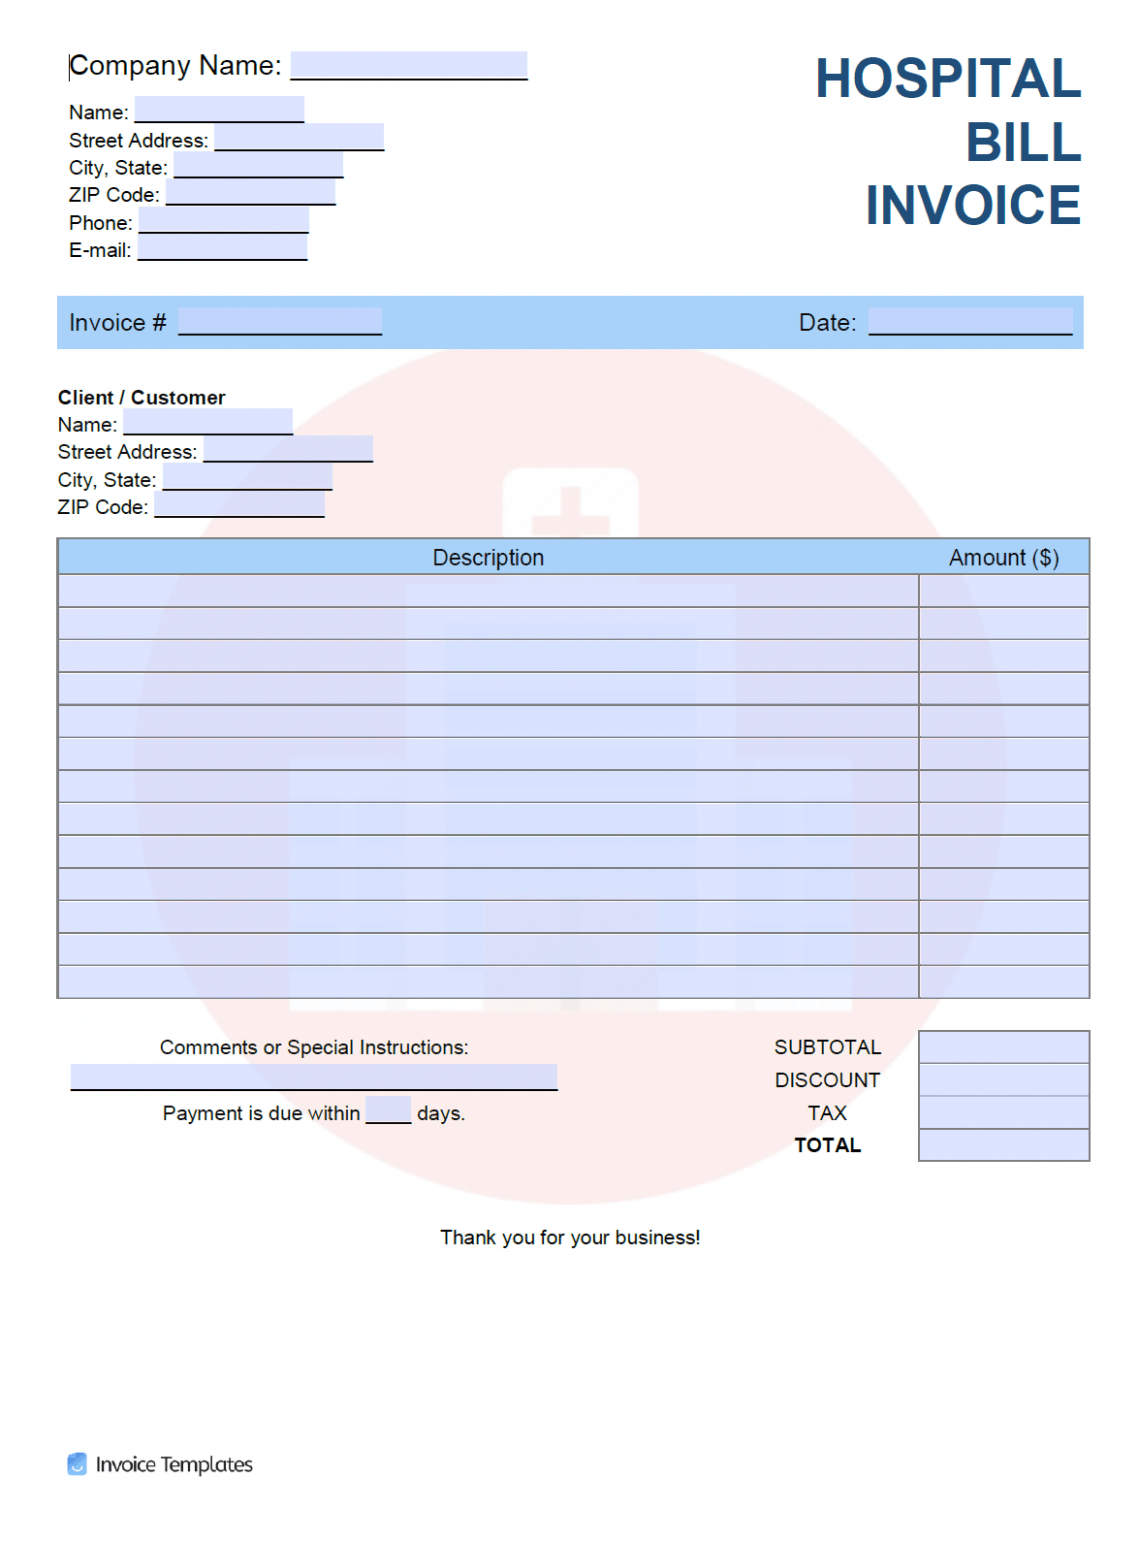 Editable Hospital Billing Invoice Template Excel